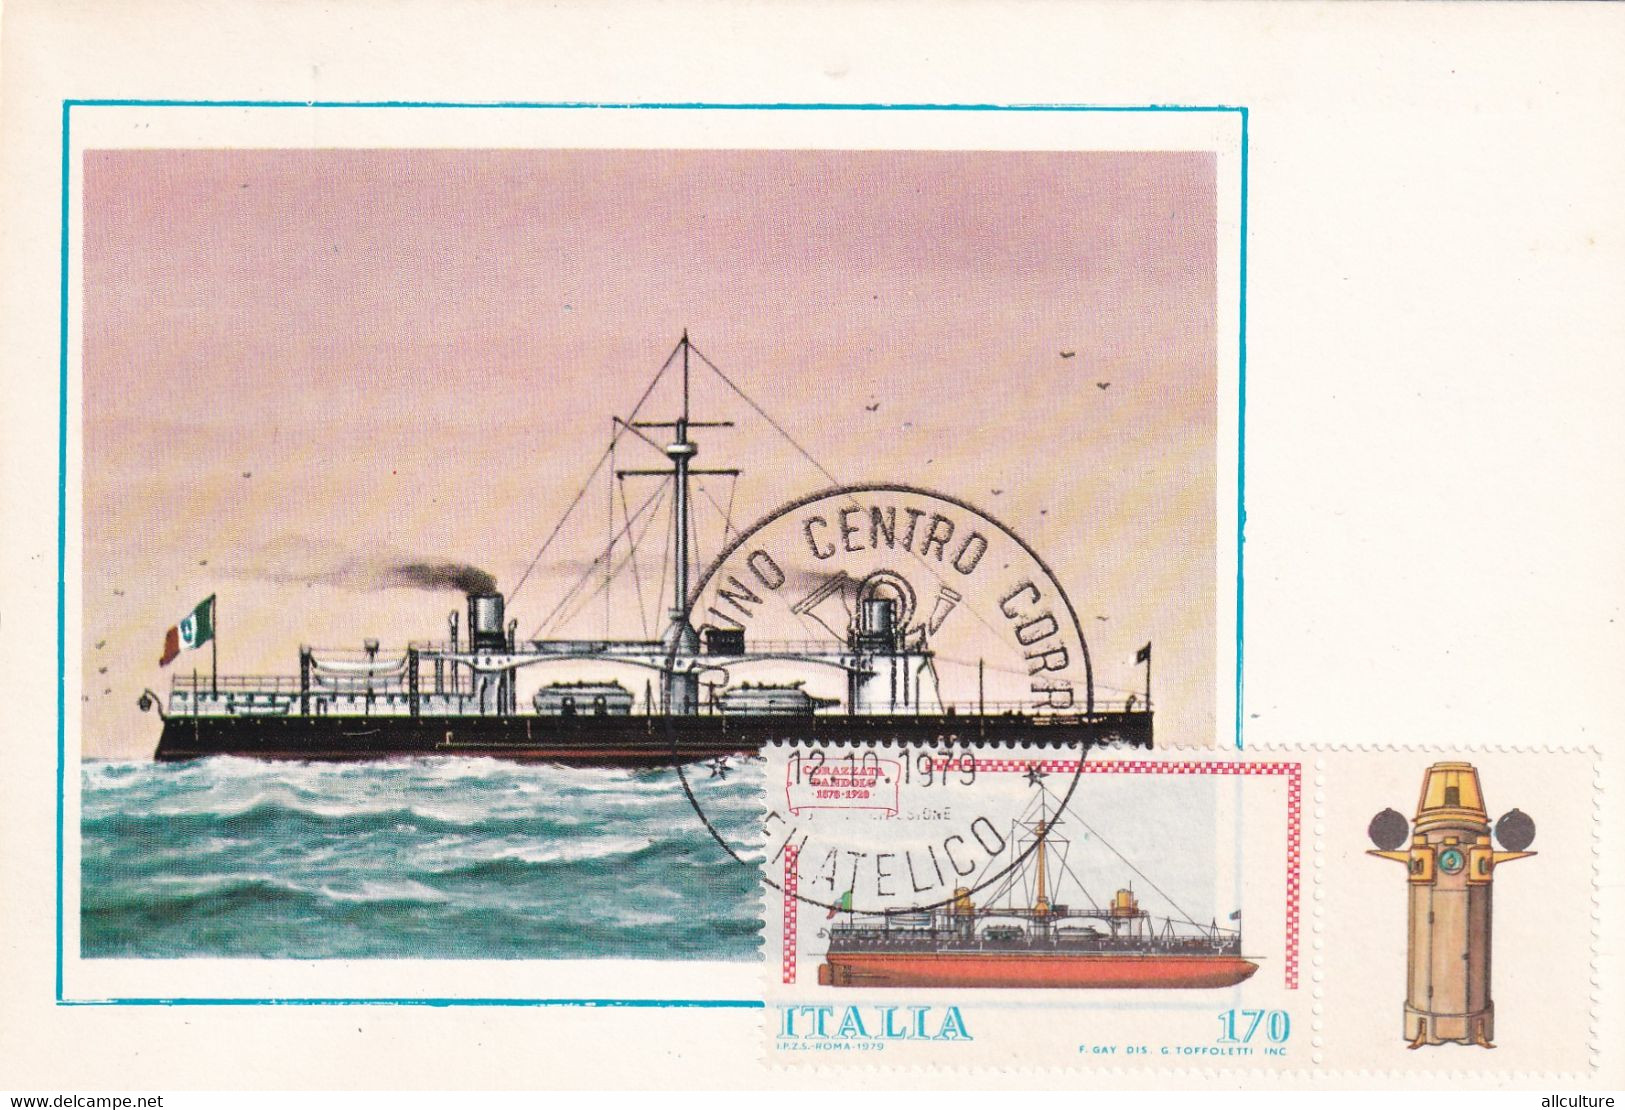 A10857- NAVE CORAZZATA DANDOLO 1878-1928 , TORINO ITALIA 1979 MAXIMUM CARD USED STAMP - Cartes-Maximum (CM)